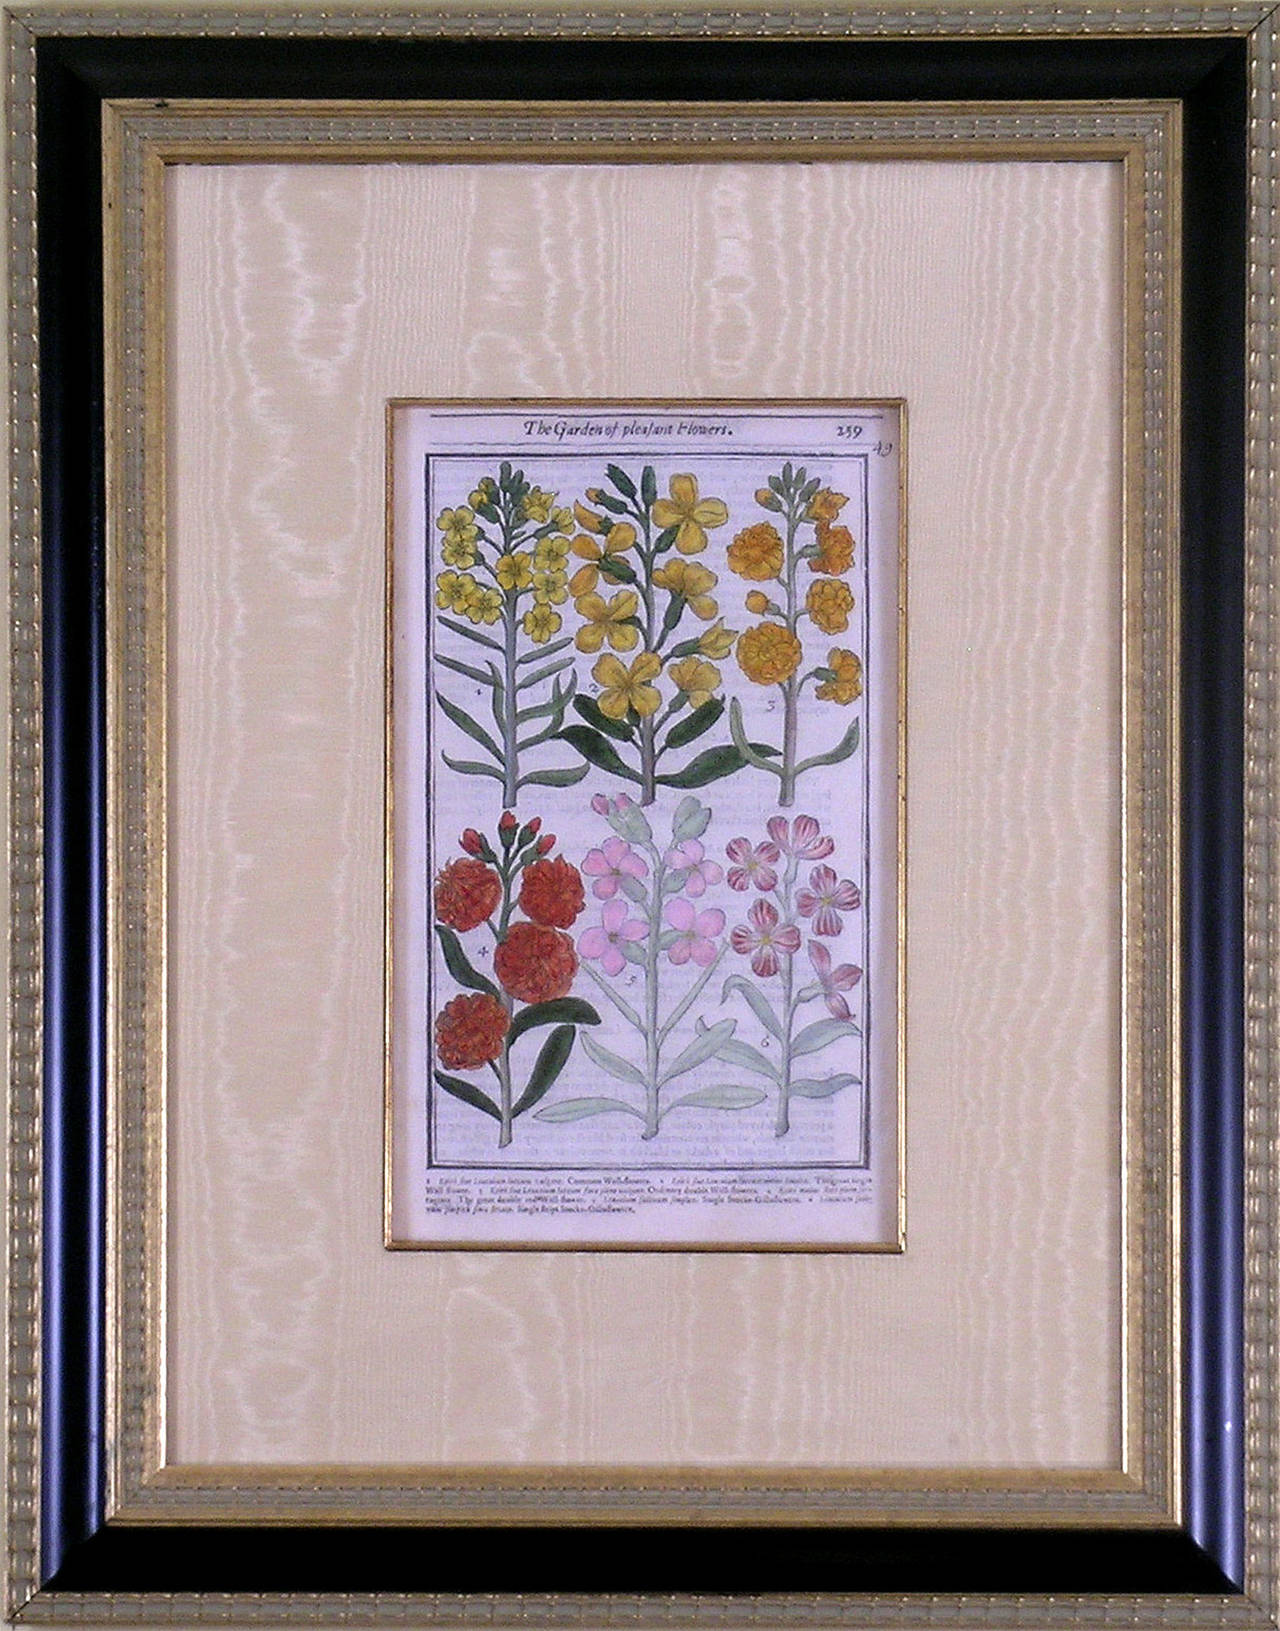 Wall Flowers - Print by John Parkinson